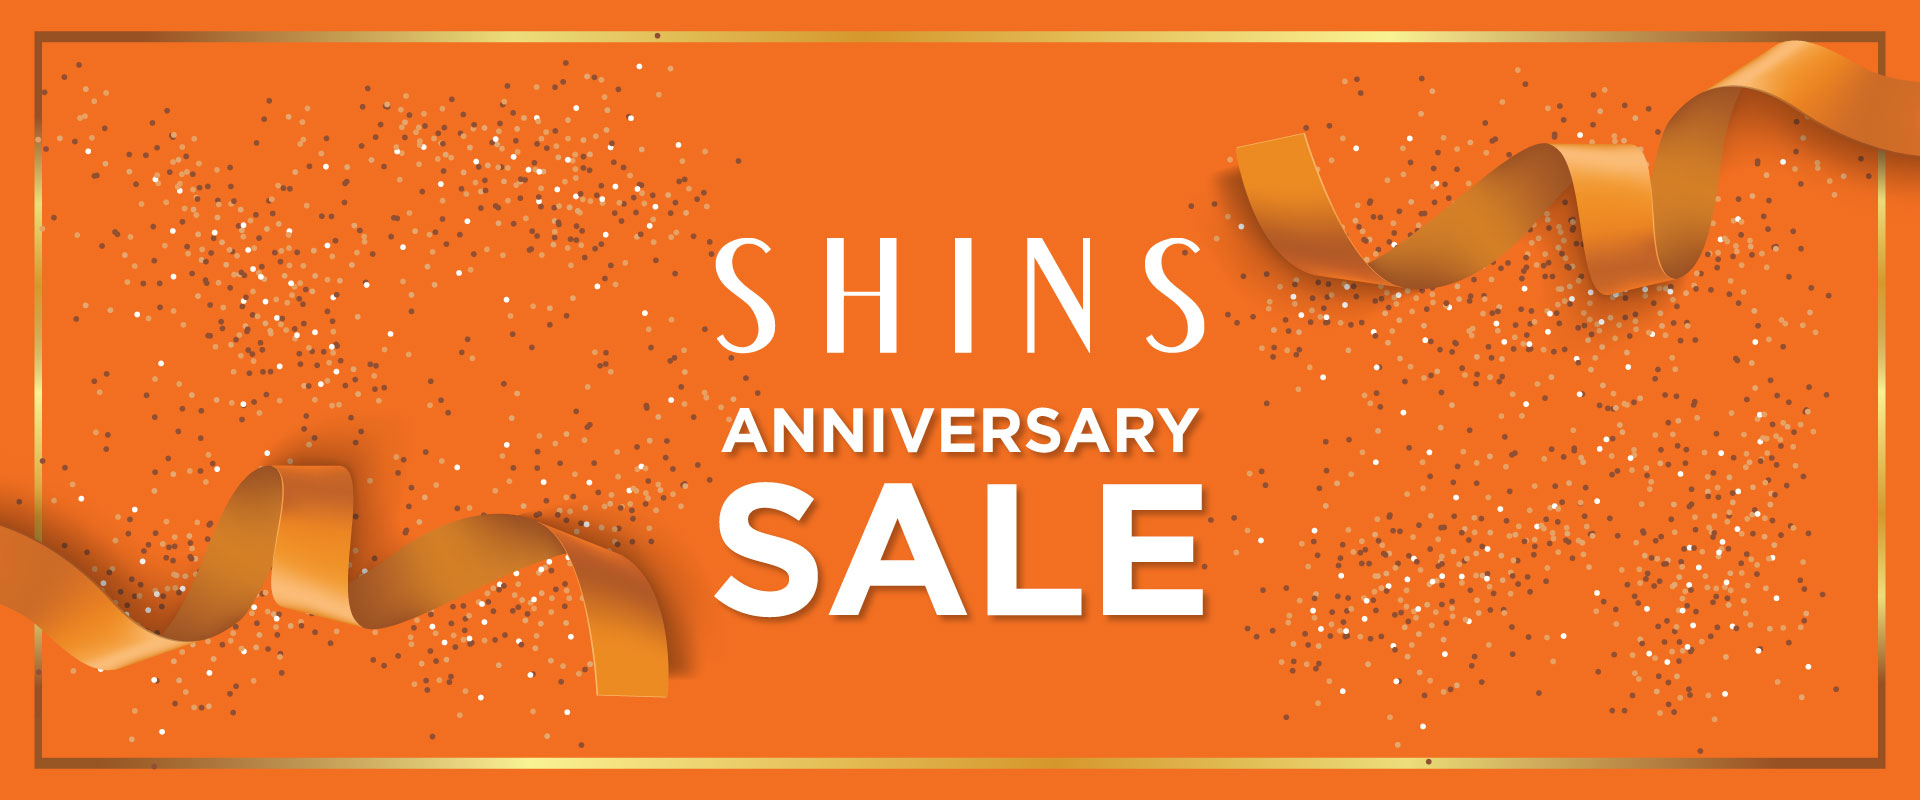 [Homepage] SHINS Anniversary Sale